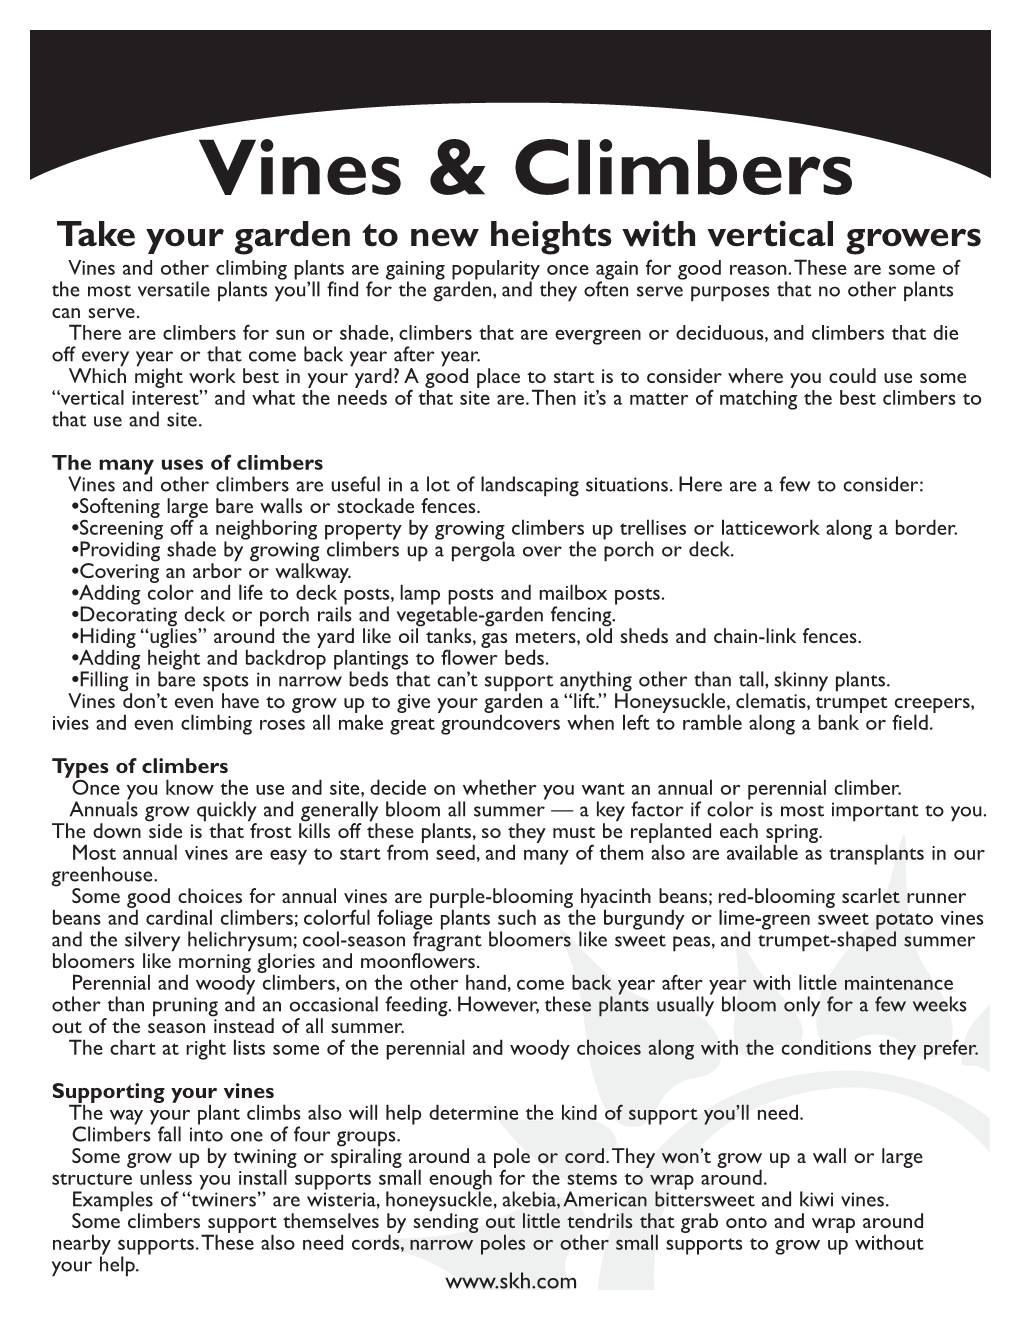 Vines & Climbers